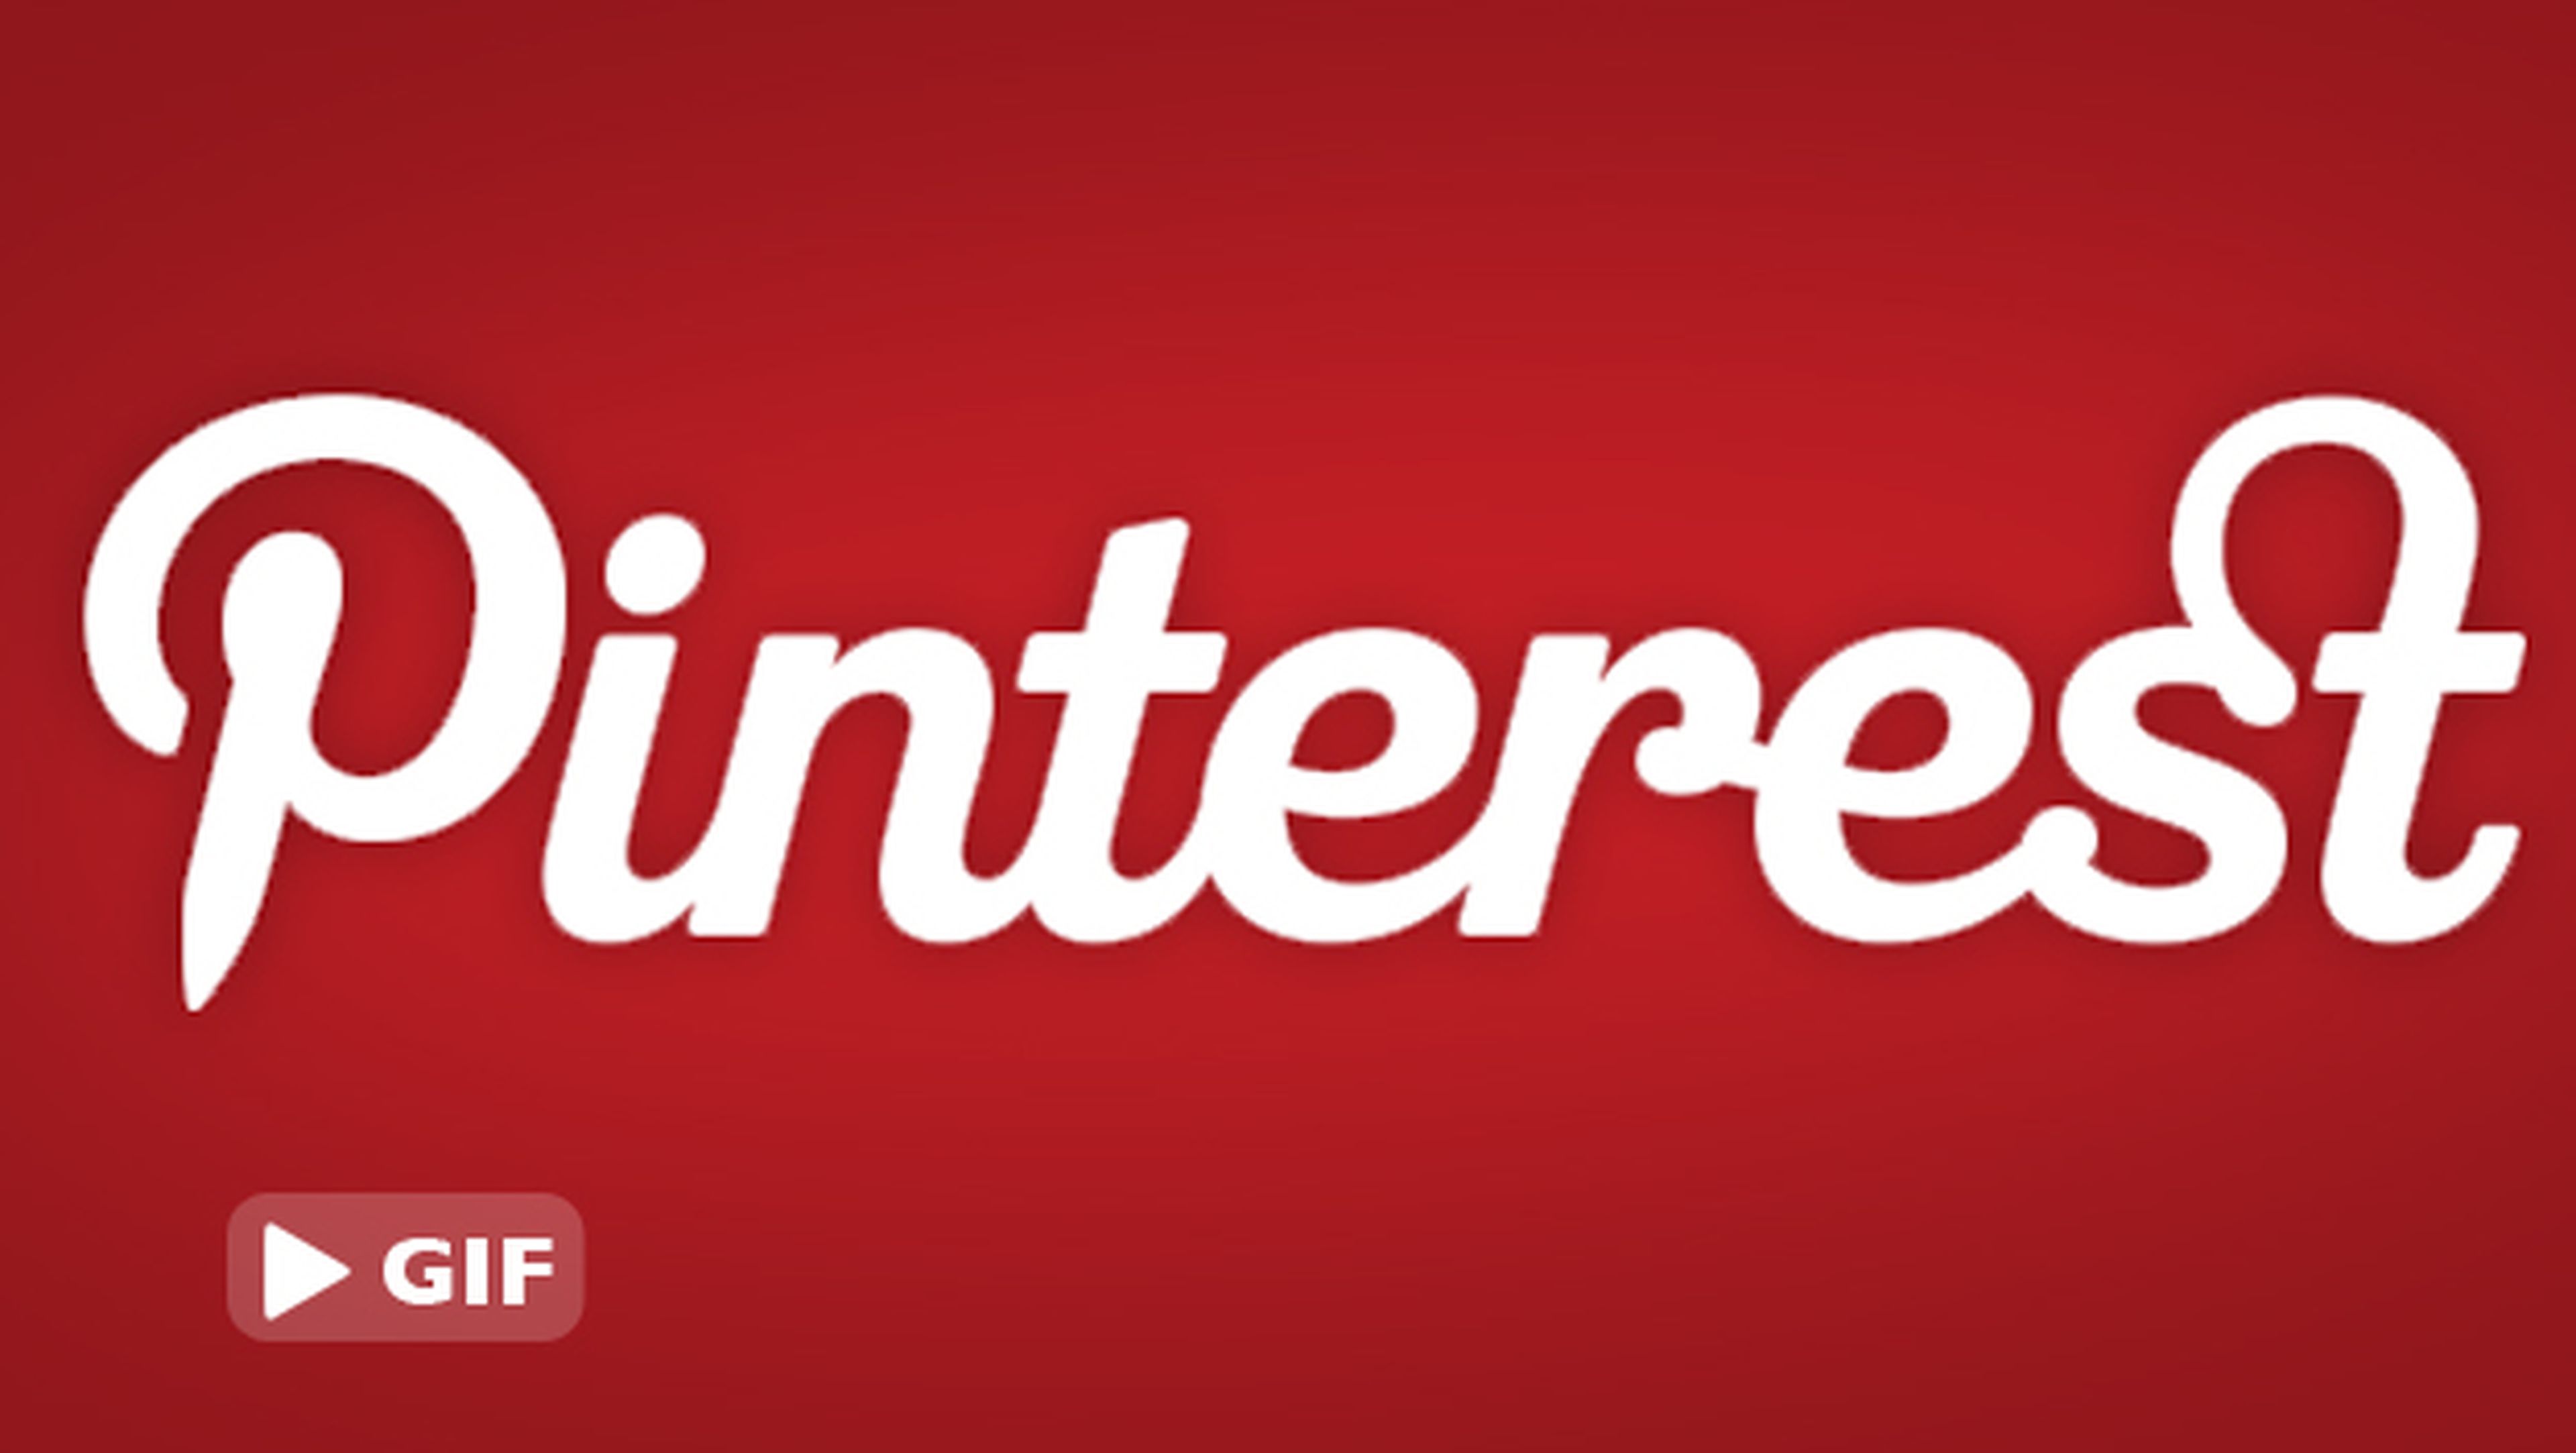 Pinterest trabaja en la implementación de GIFs